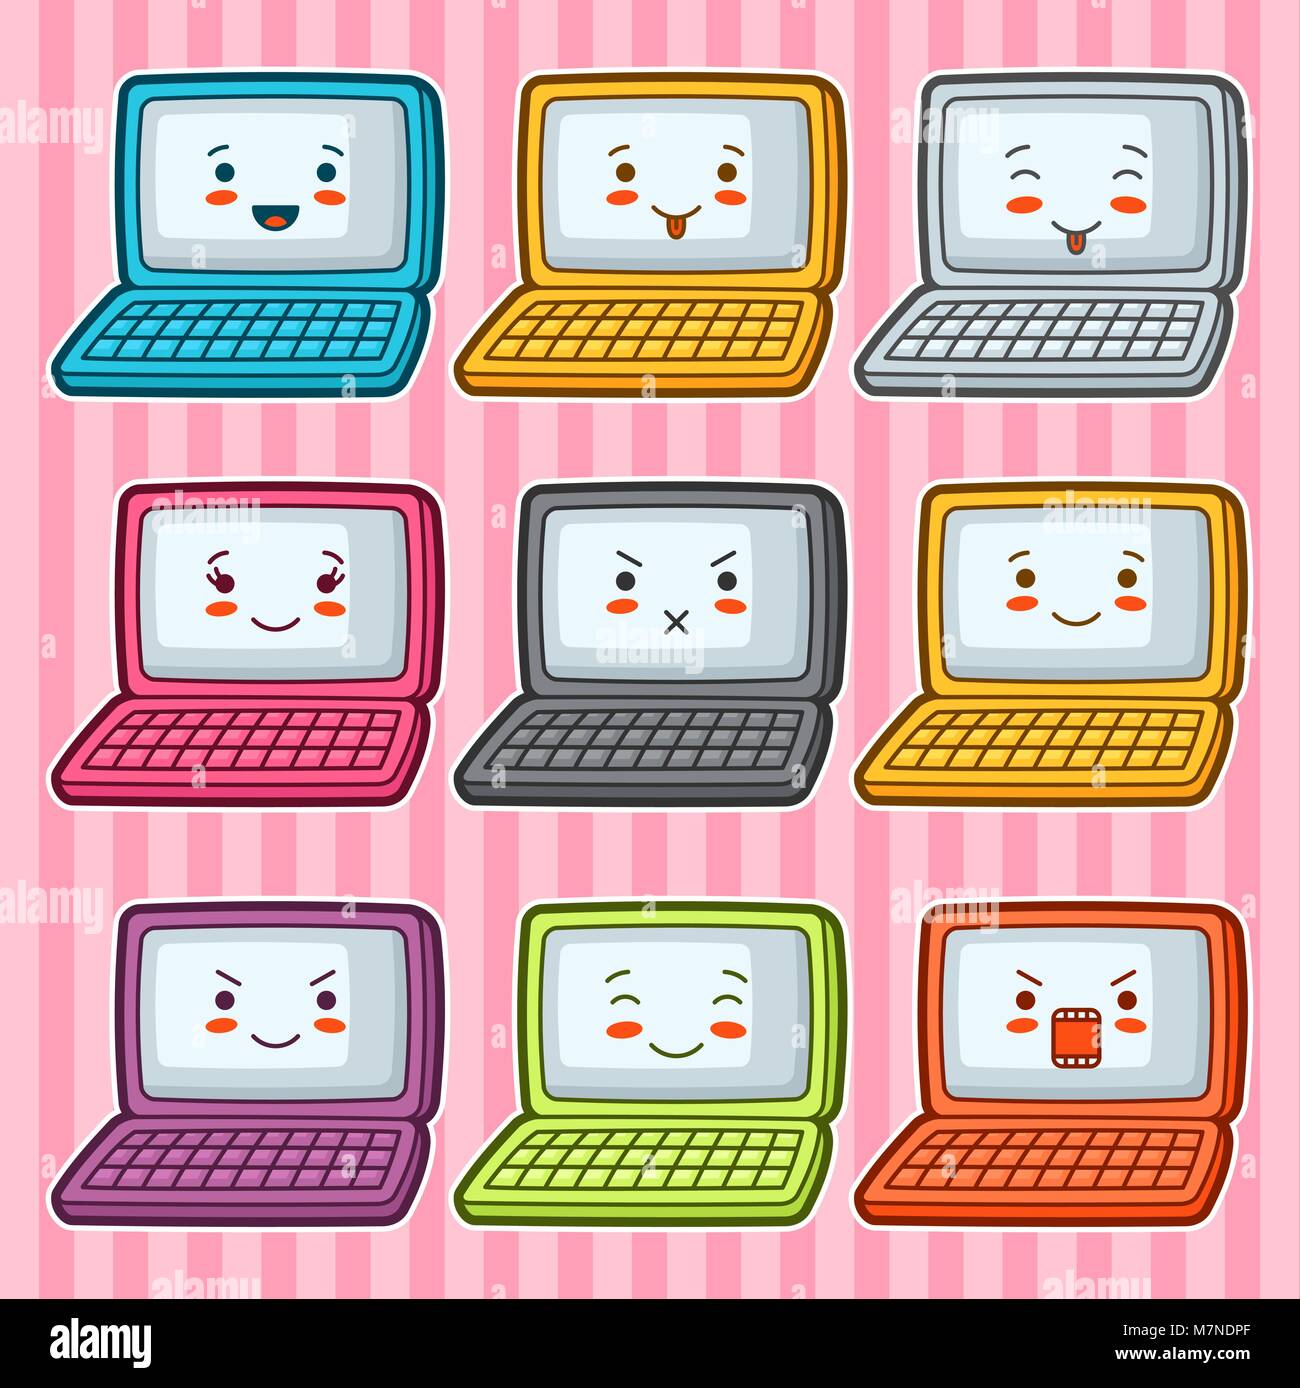 Kawaii doodle laptops set. Illustration of gadgets with various